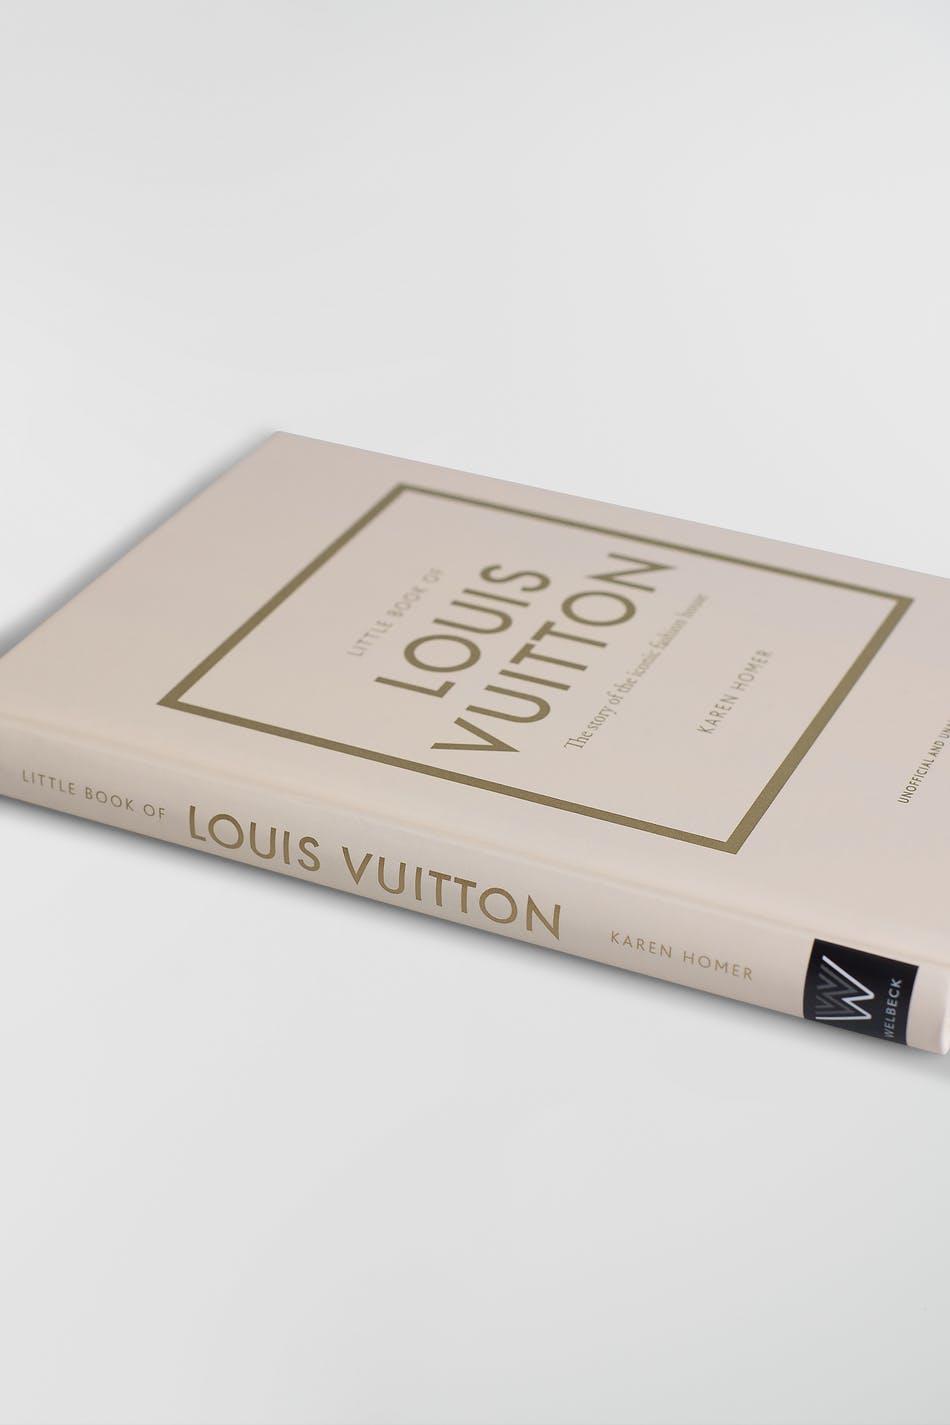 Coffee Books - Little Book Of Louis Vuitton